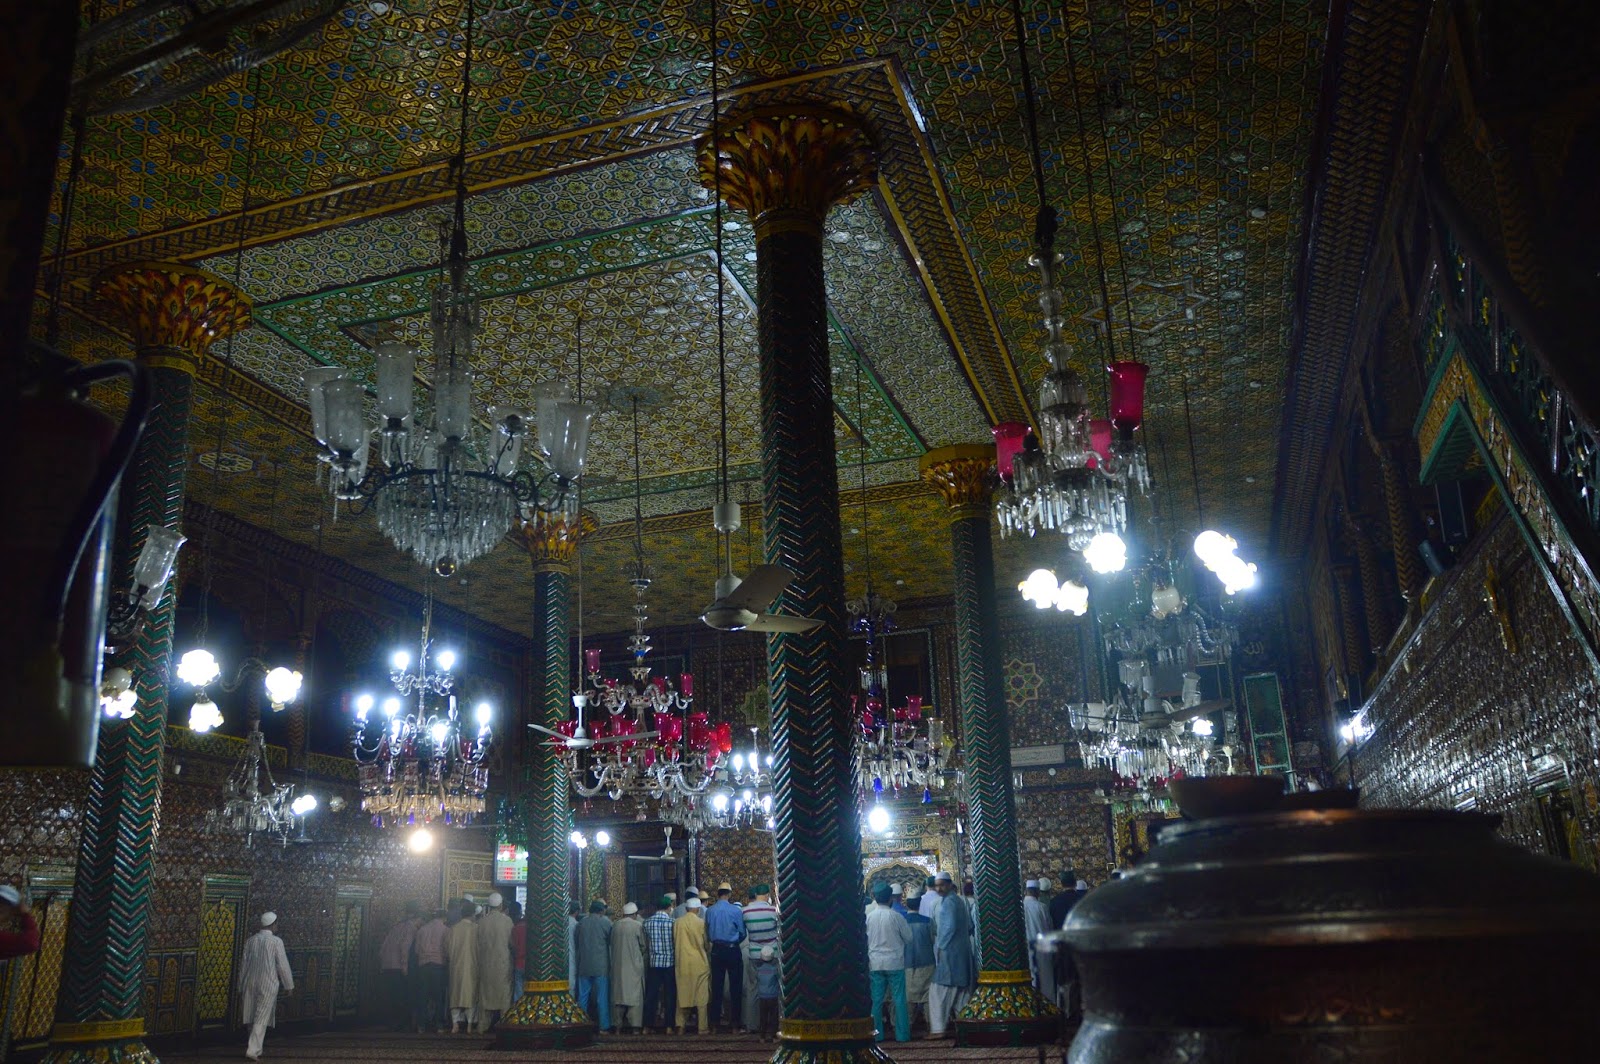 shah-e-hamdan mosque Khanqah masjid srinagar kashmir